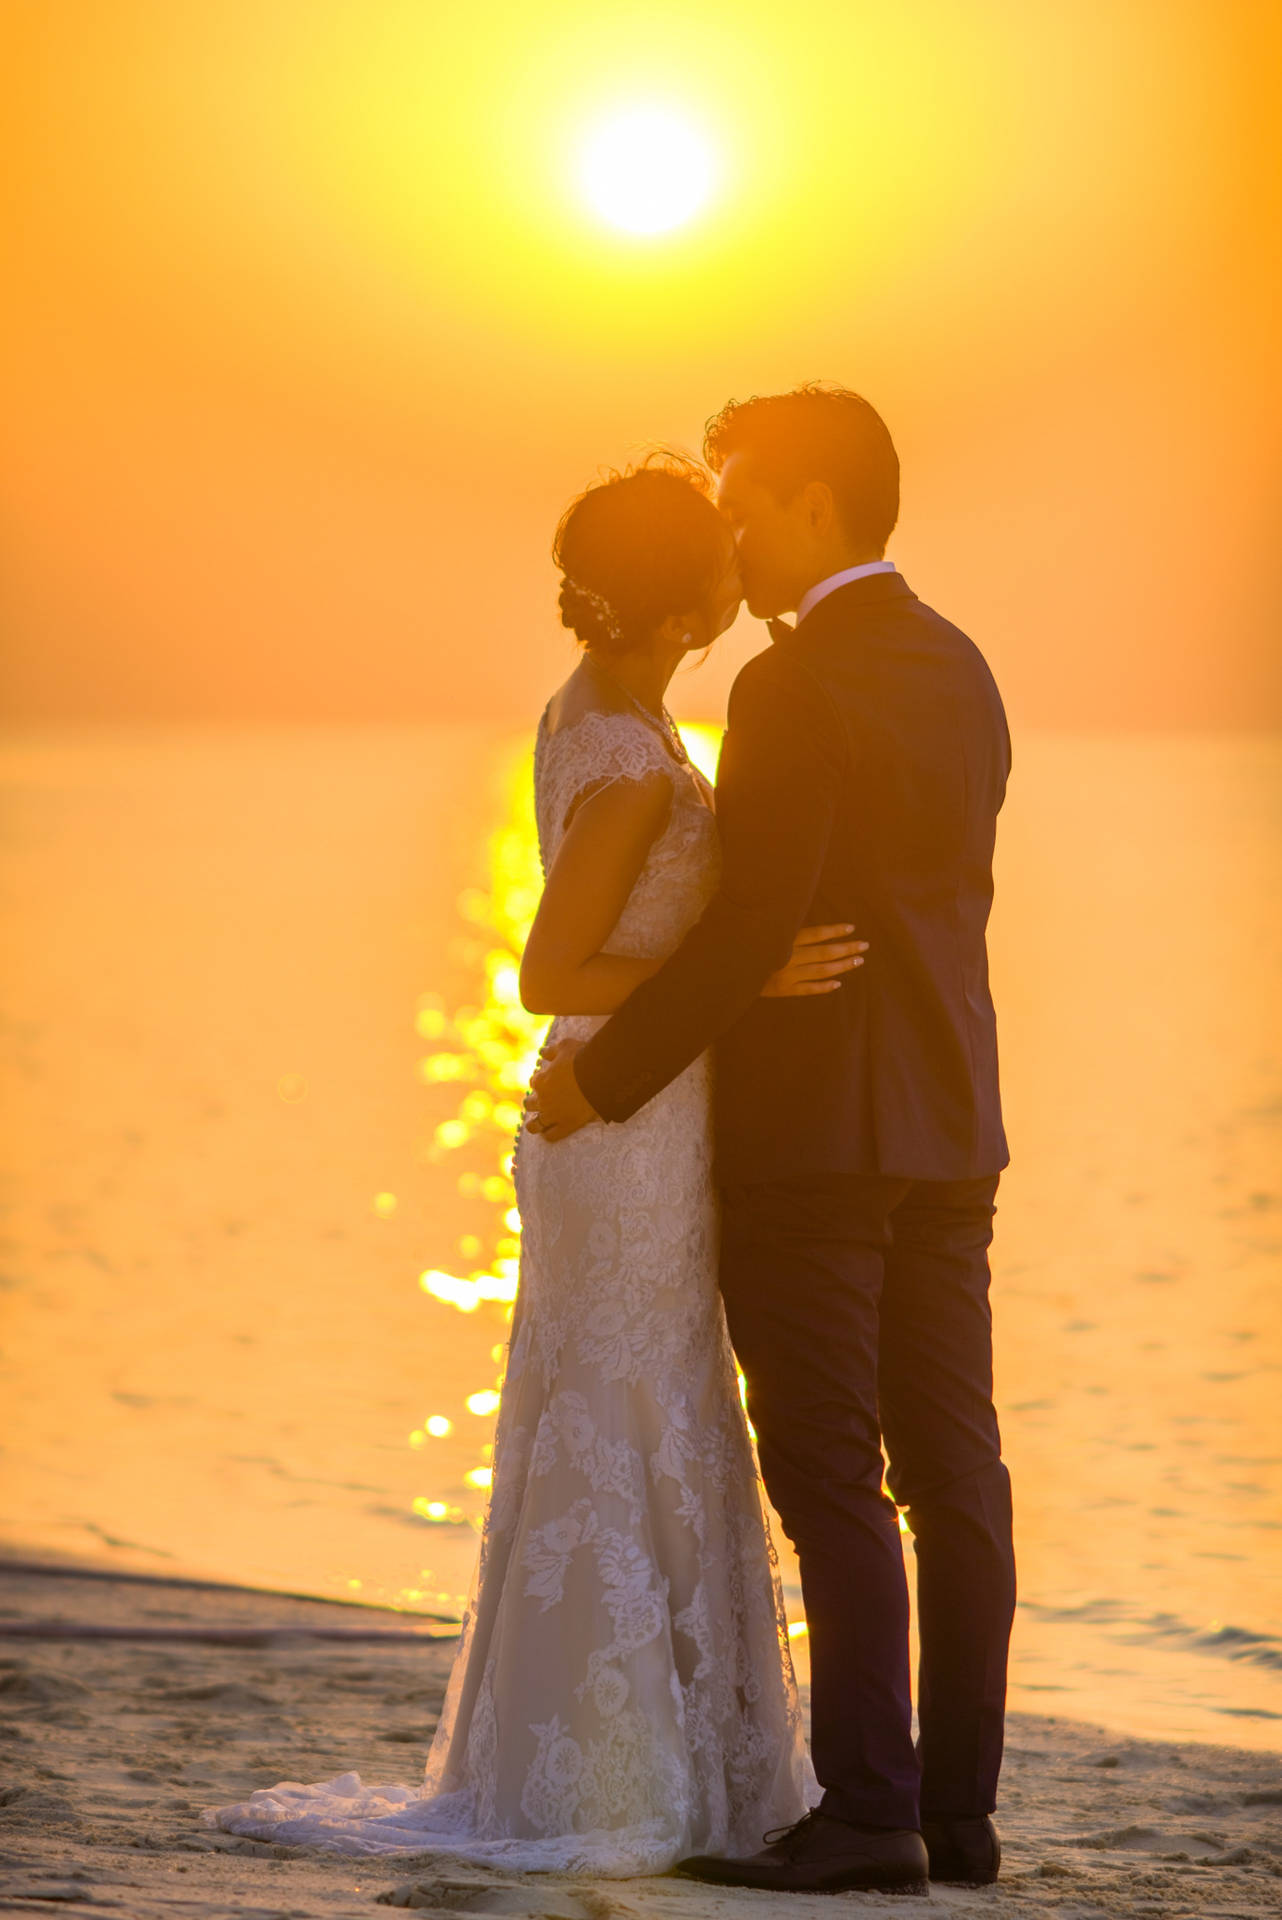 Romantic Couple Sunset Wedding Kiss Wallpaper